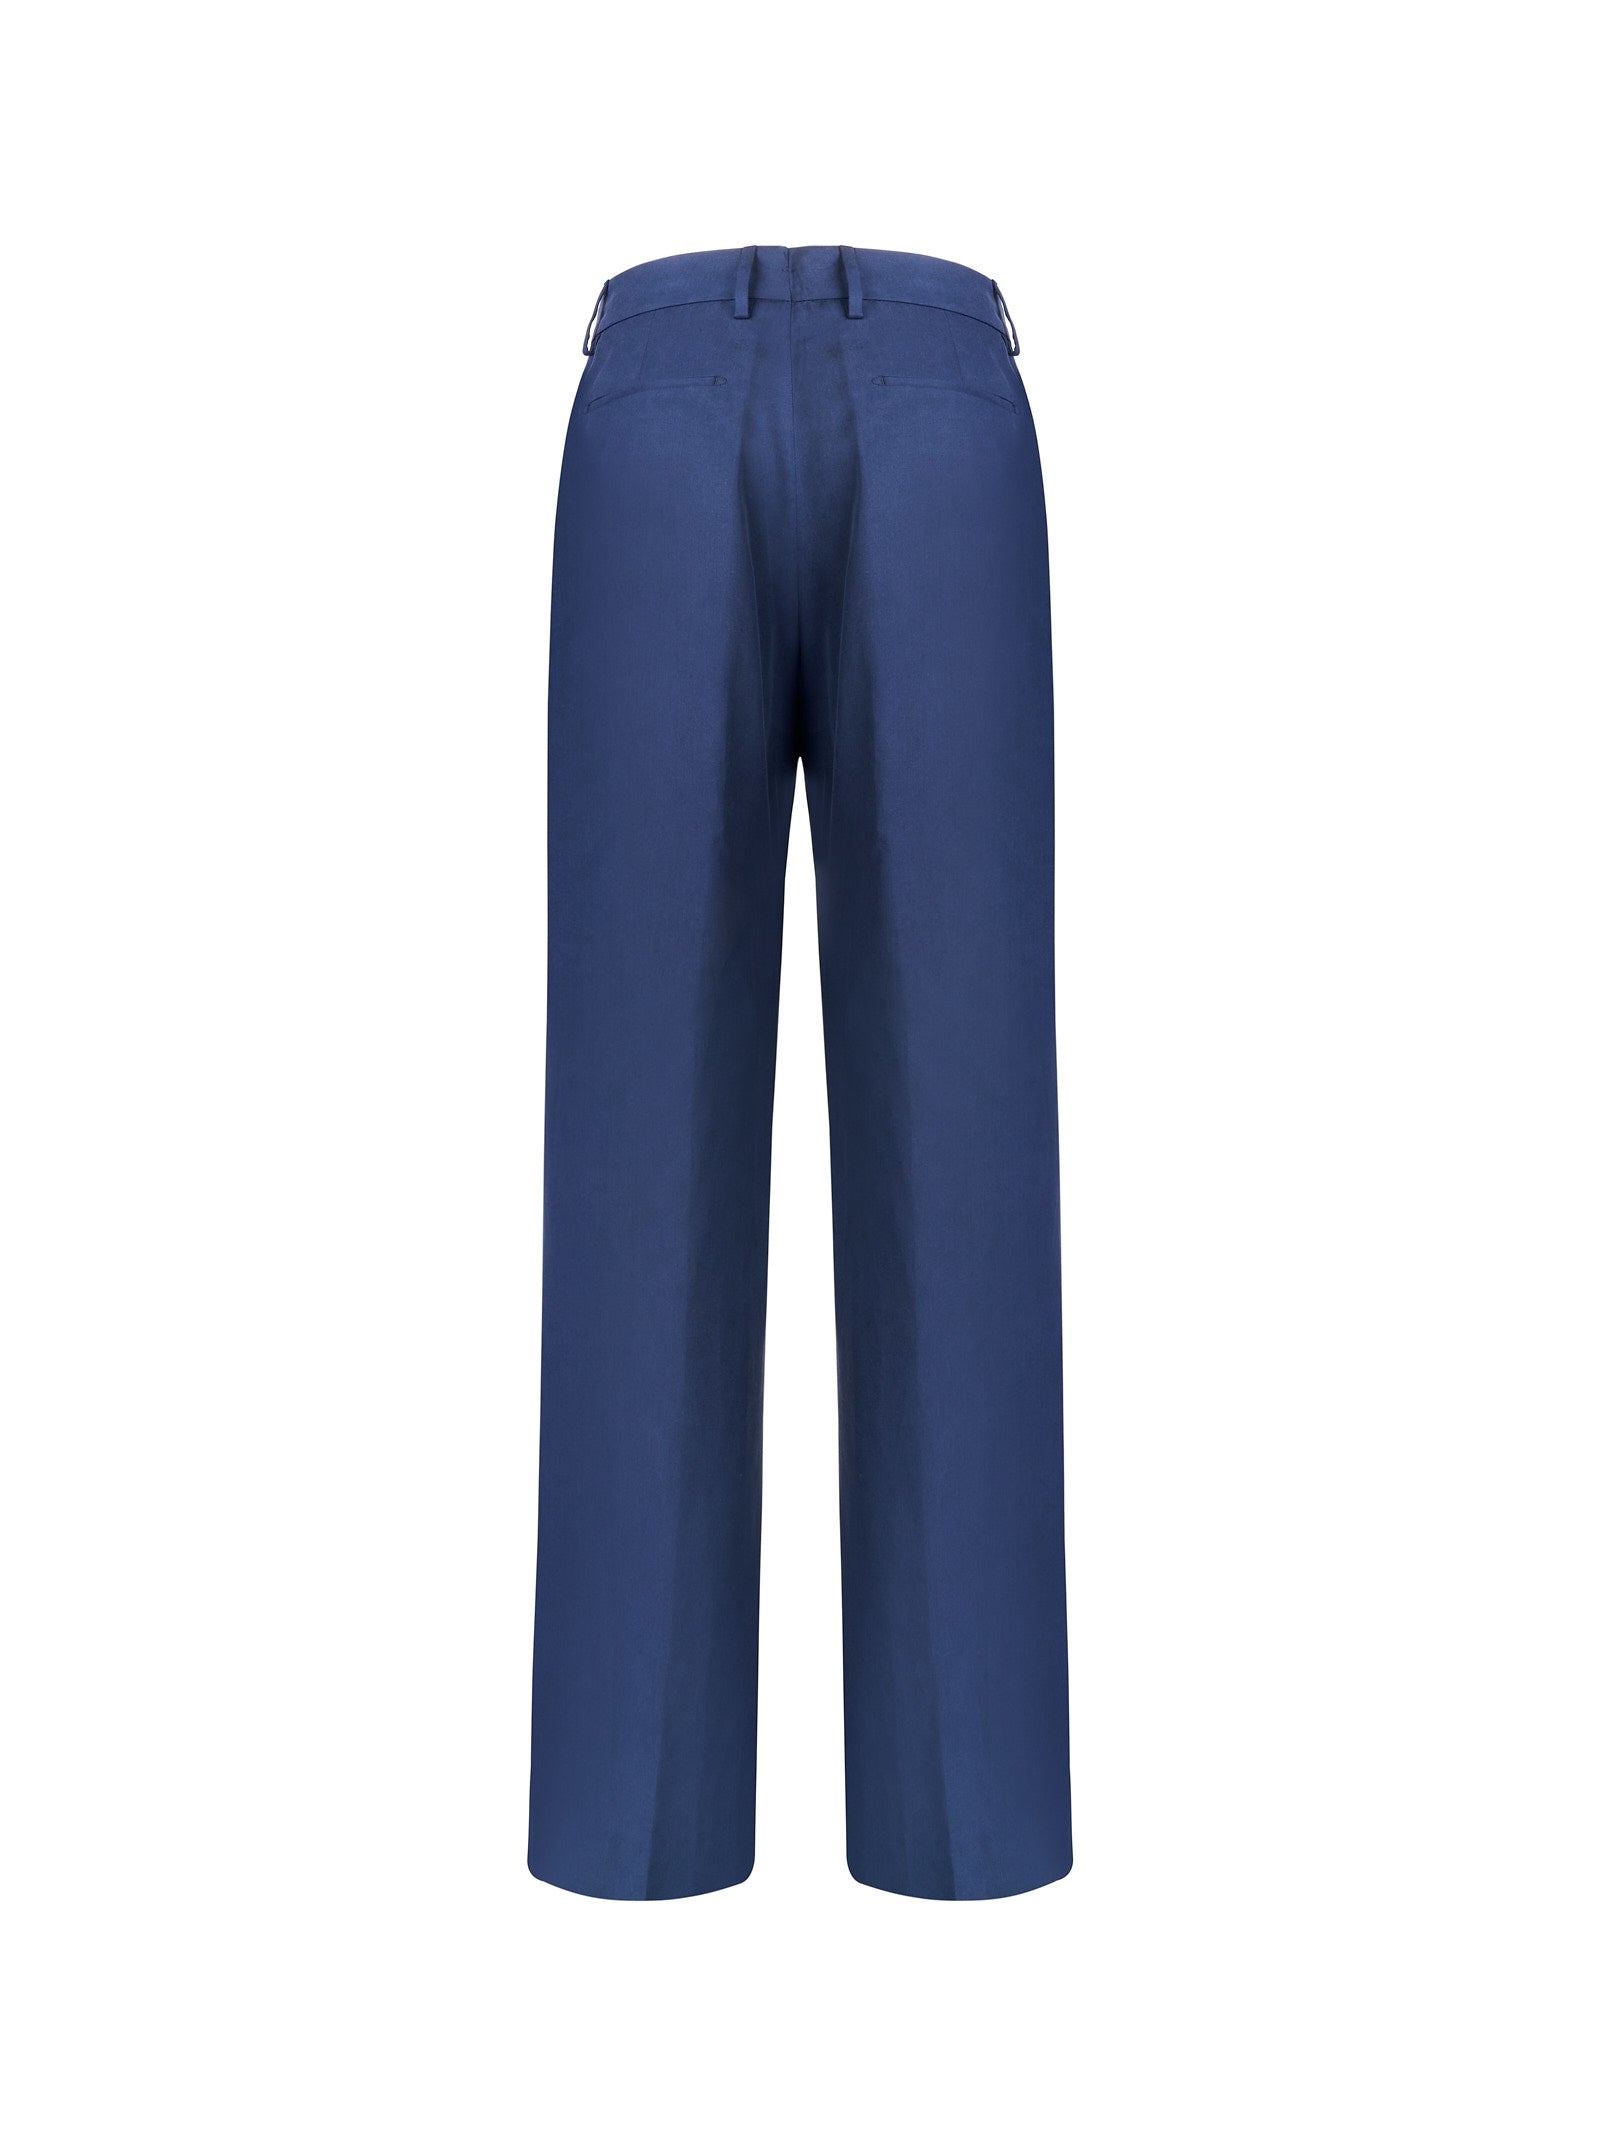 Pantalone BERWICH Patrizia
Blu